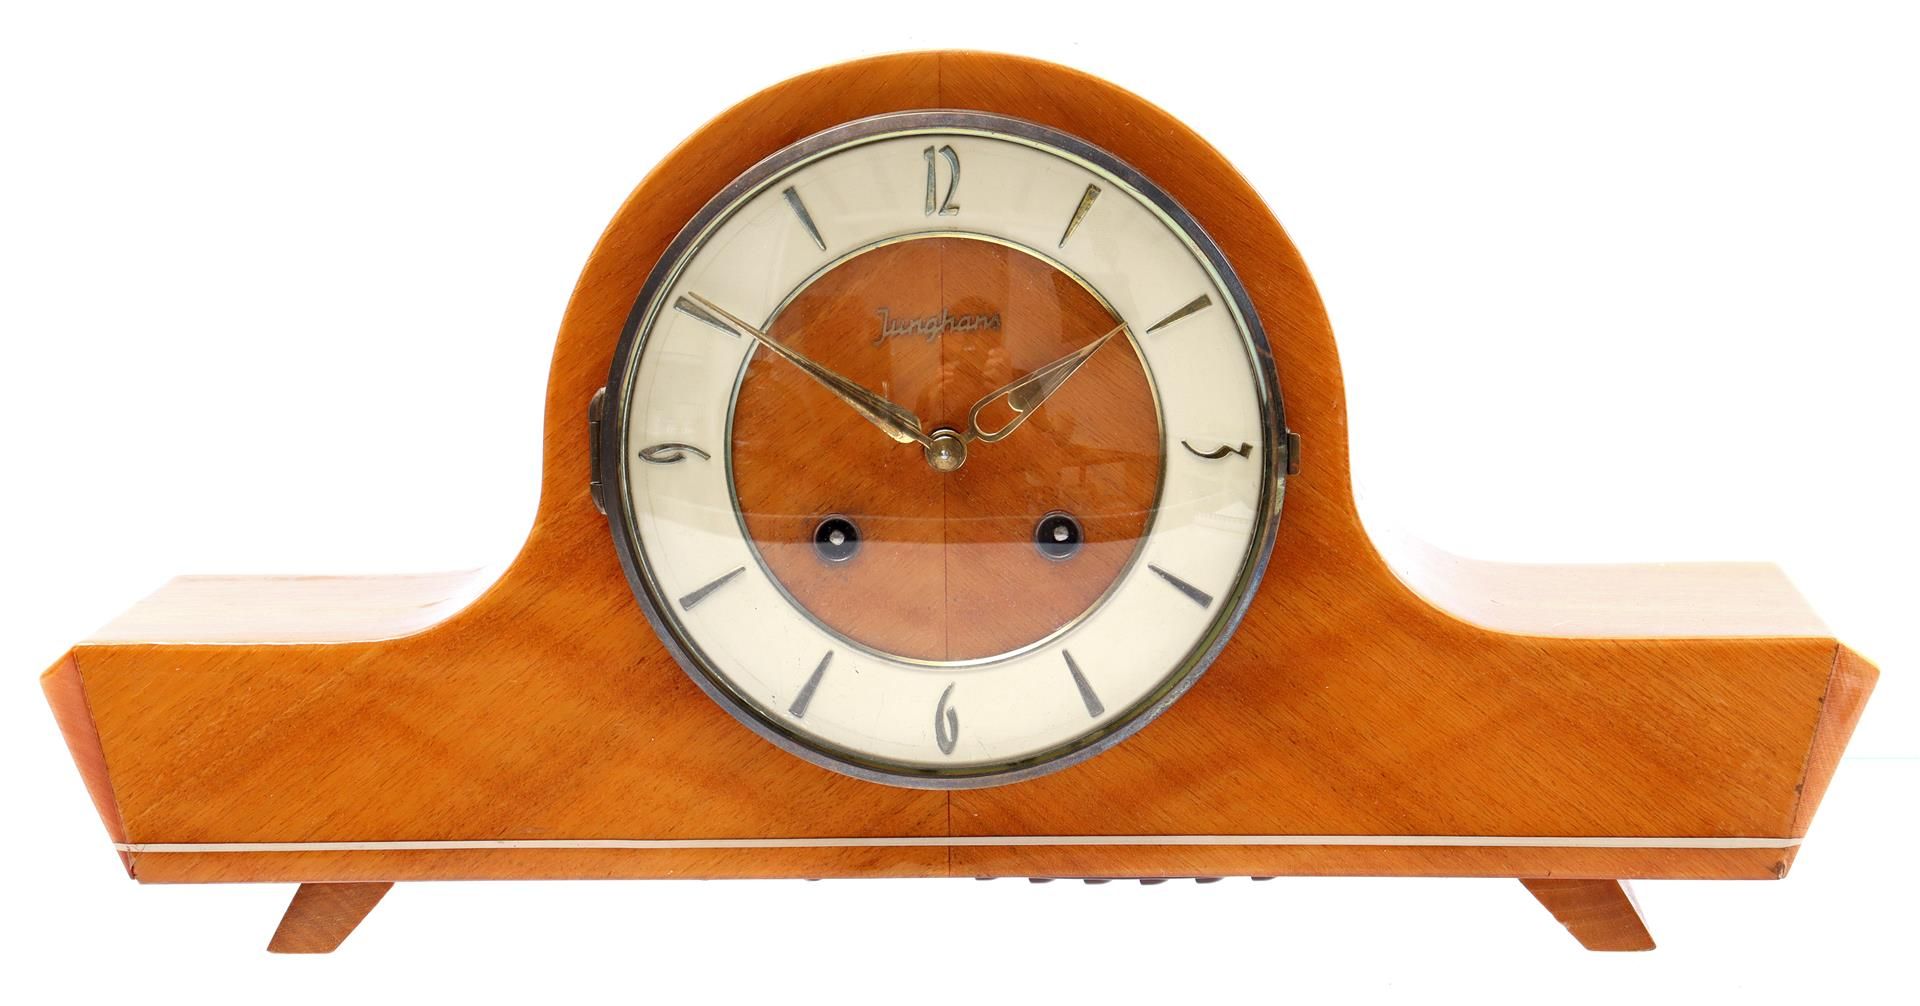 JUNGHANS Junghans table mantel clock in walnut cabinet, 17.5 cm high